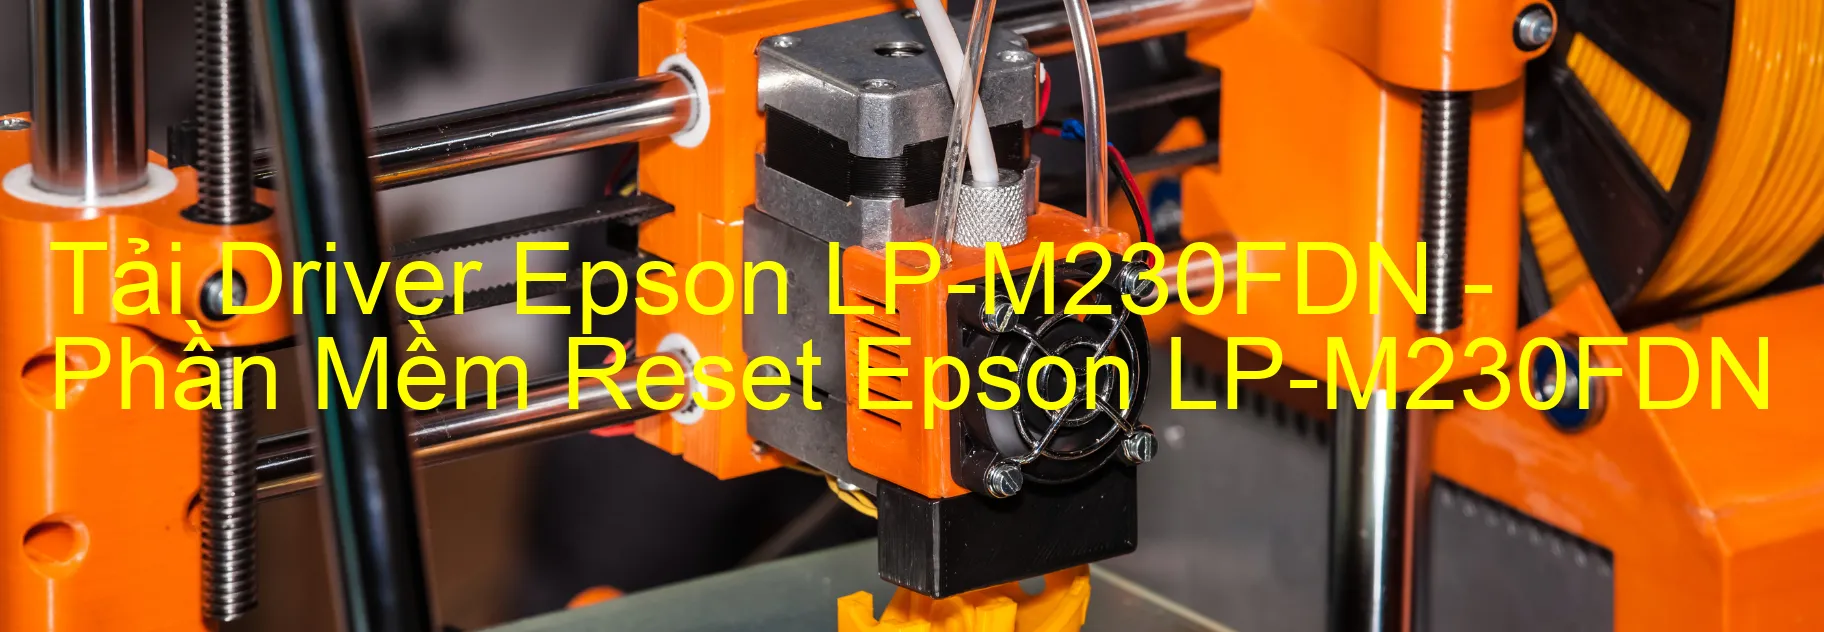 Driver Epson LP-M230FDN, Phần Mềm Reset Epson LP-M230FDN